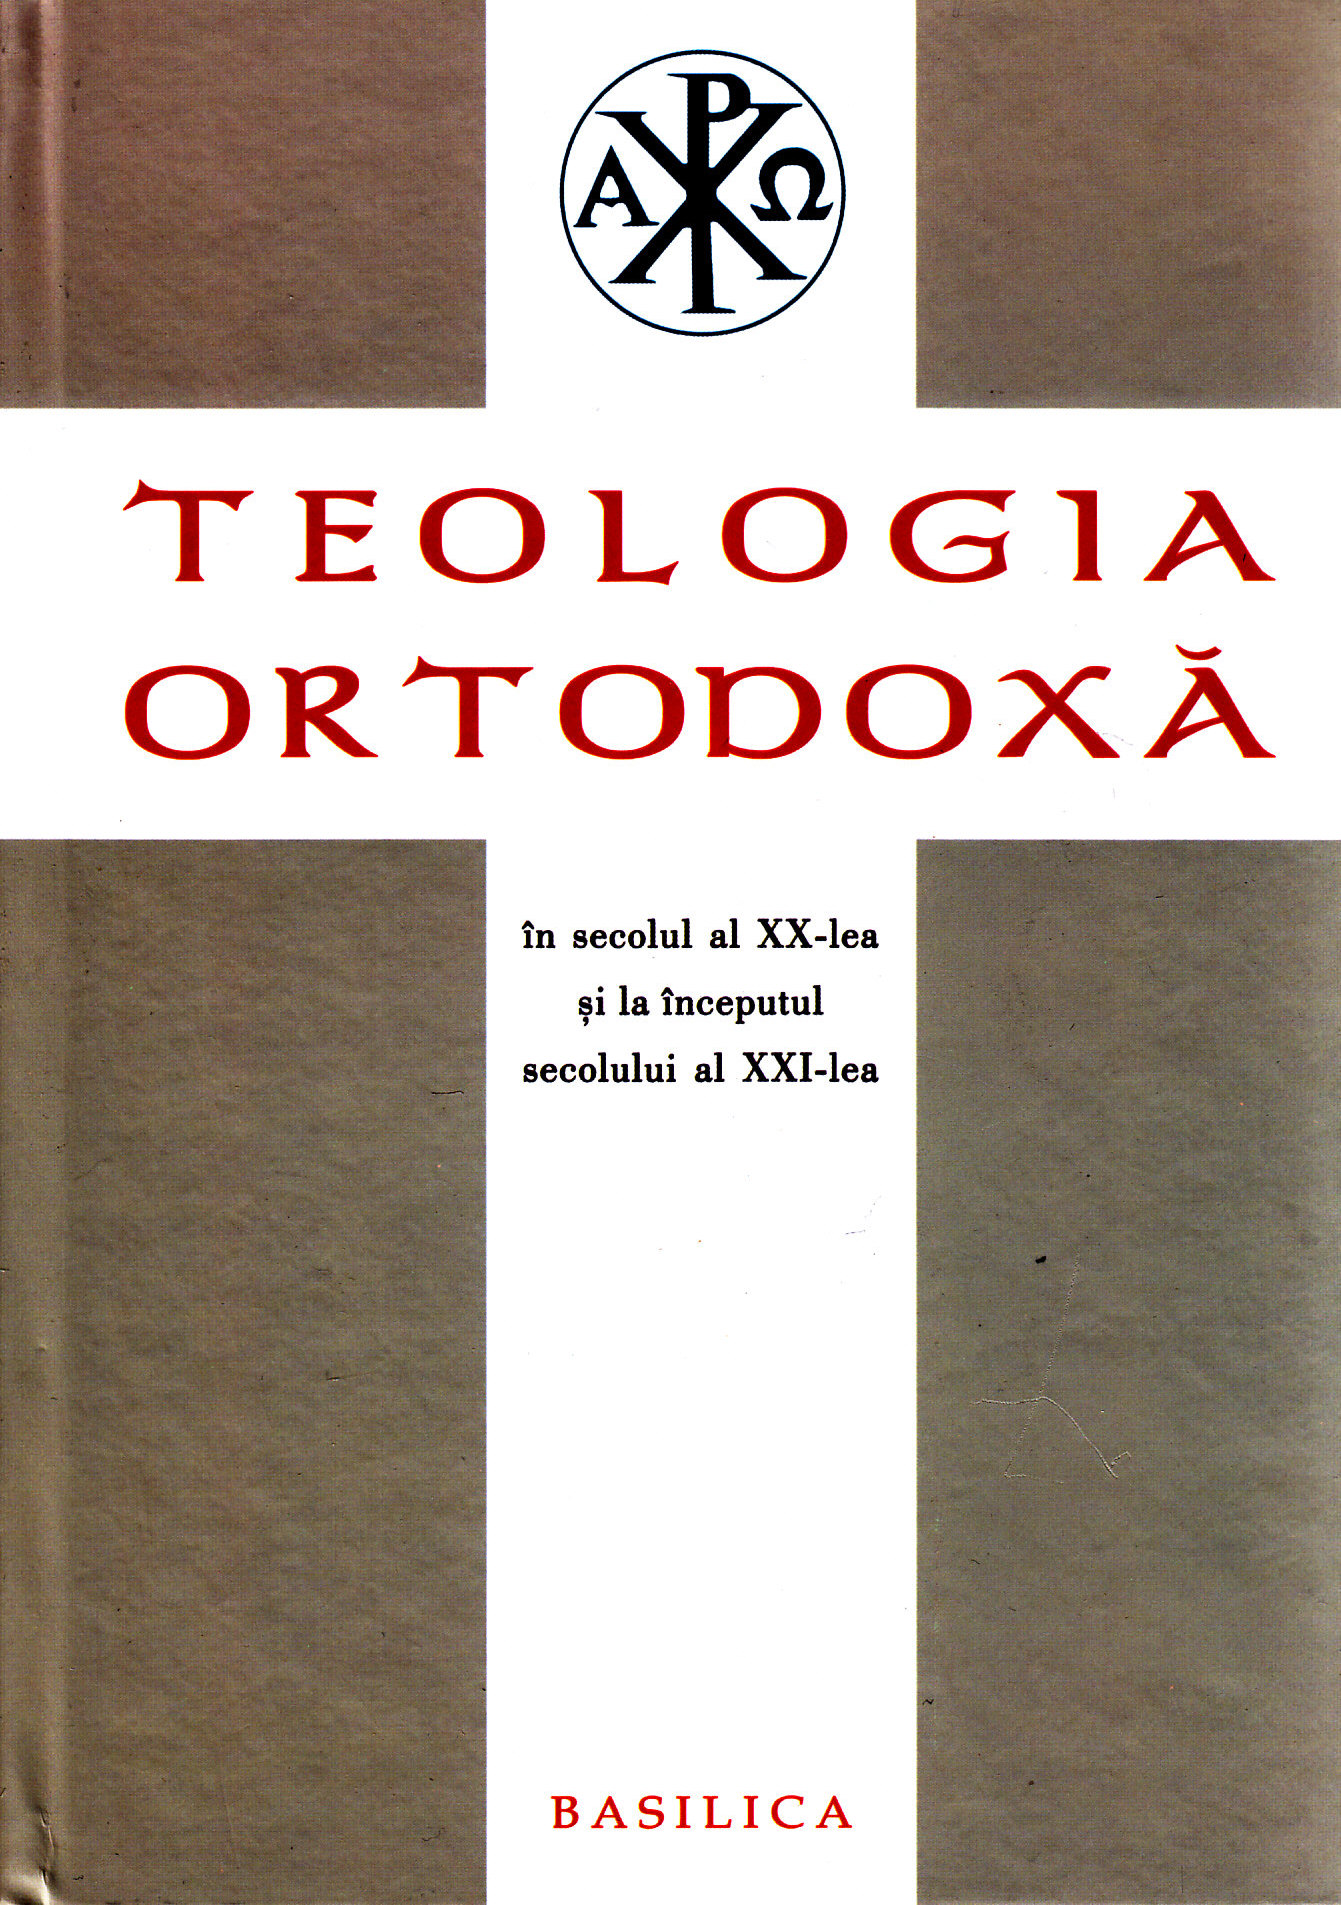 Teologia ortodoxa in secolul al XX-lea si la inceputul secolului al XXI-lea